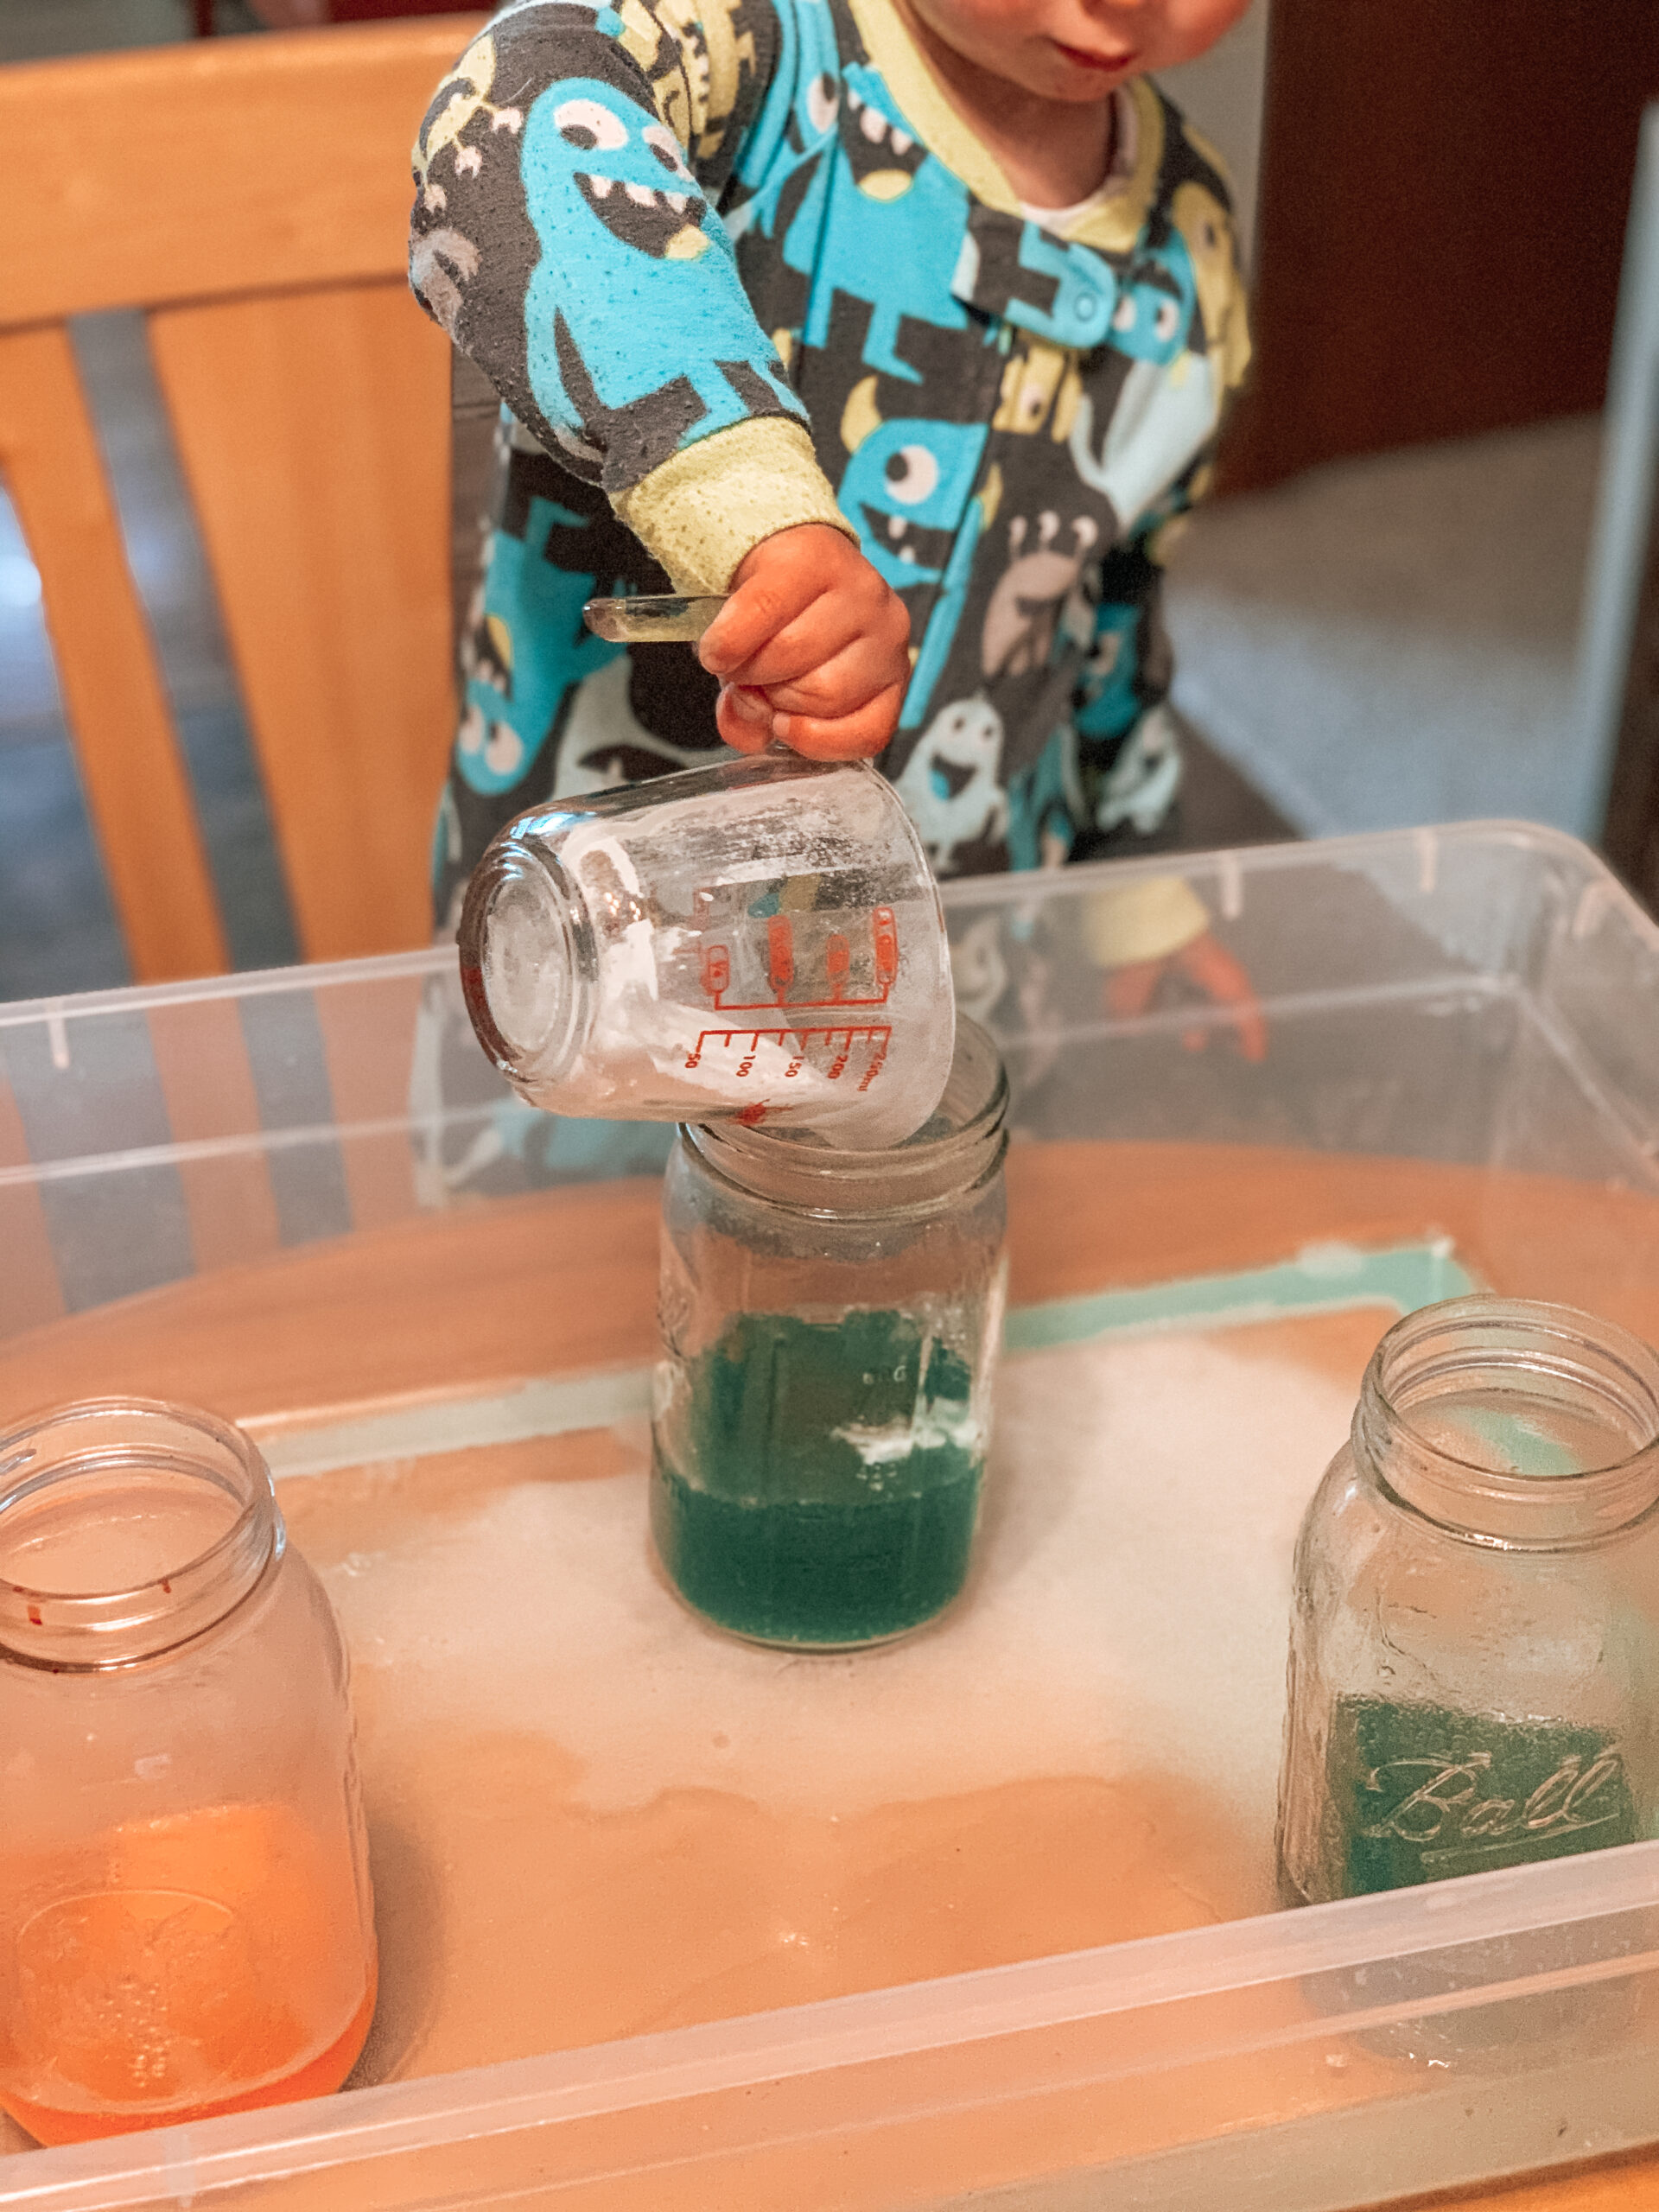 baking soda and vinegar experiment